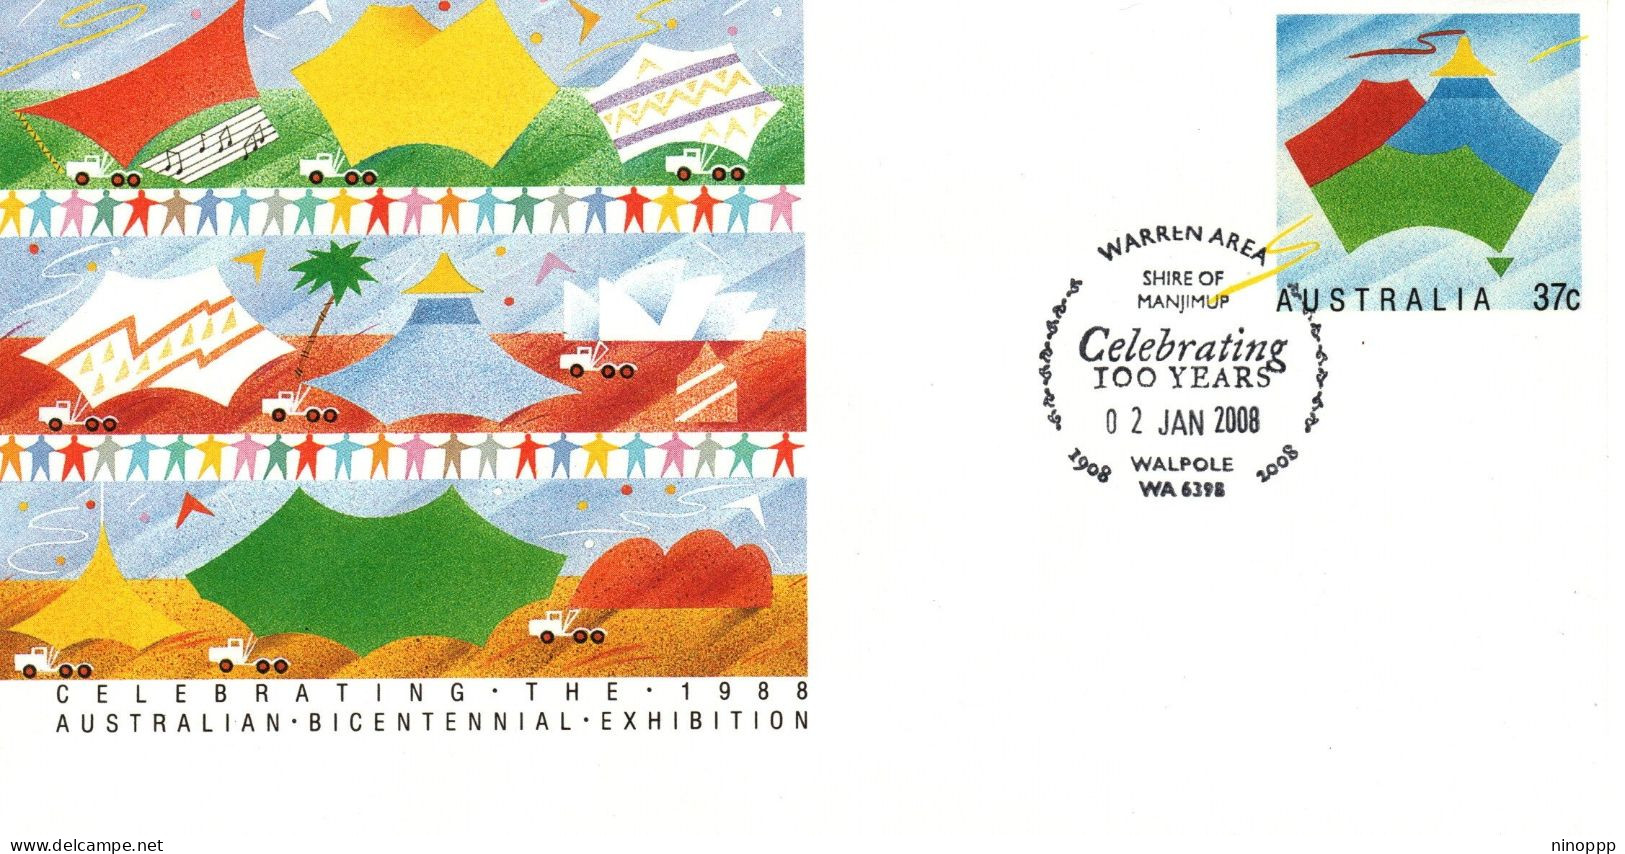 Australia 2008 ,Warren Area Celebrating 100 Years,Walpole Postmark,souvenir Cover - Poststempel